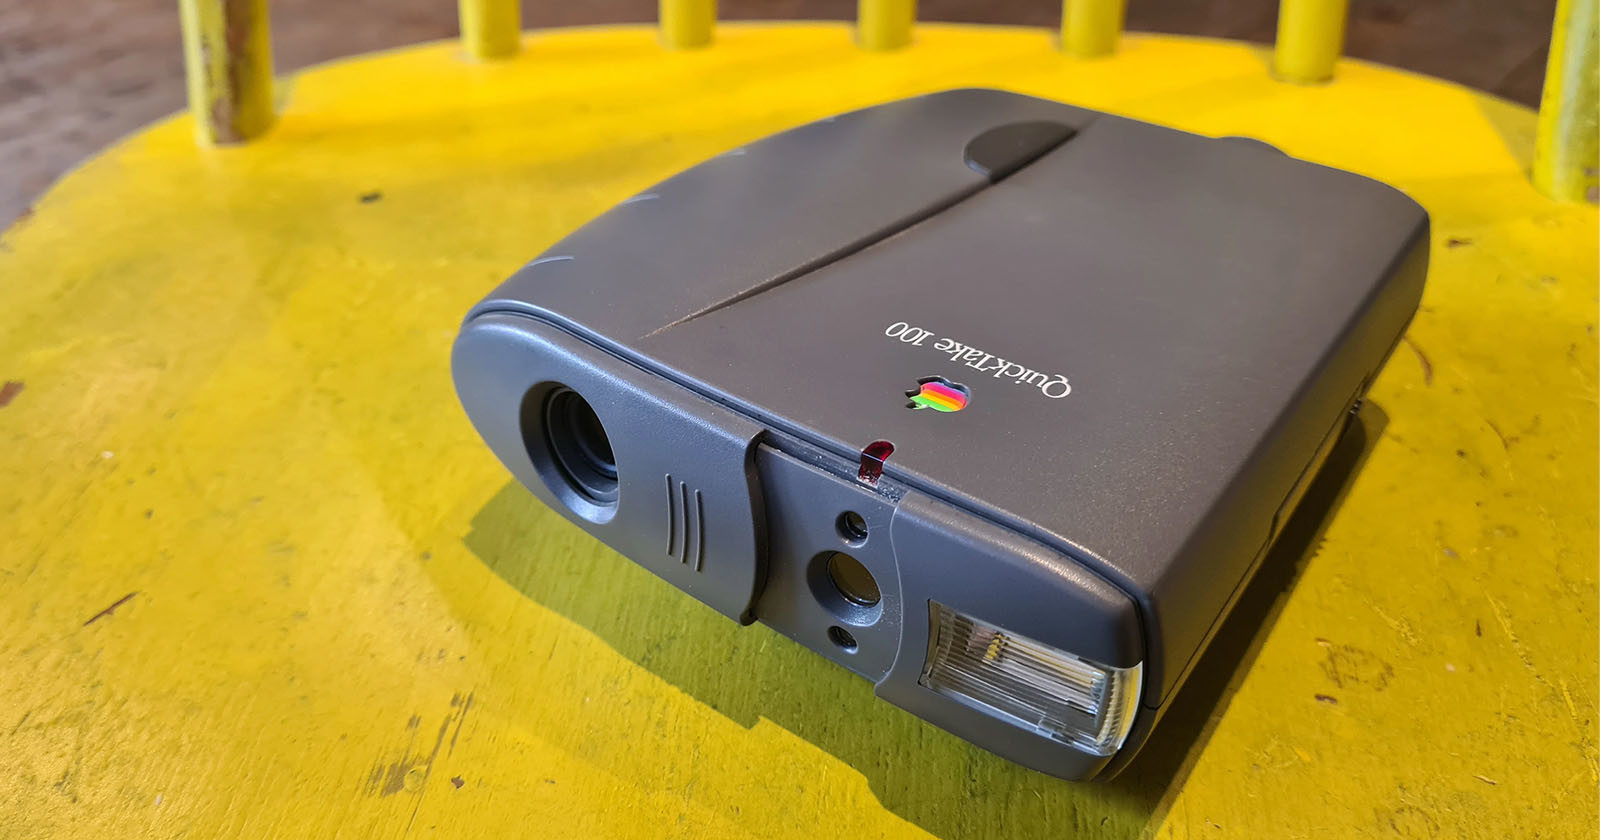  apple 29-year-old landmark quicktake 100 camera falters 2023 